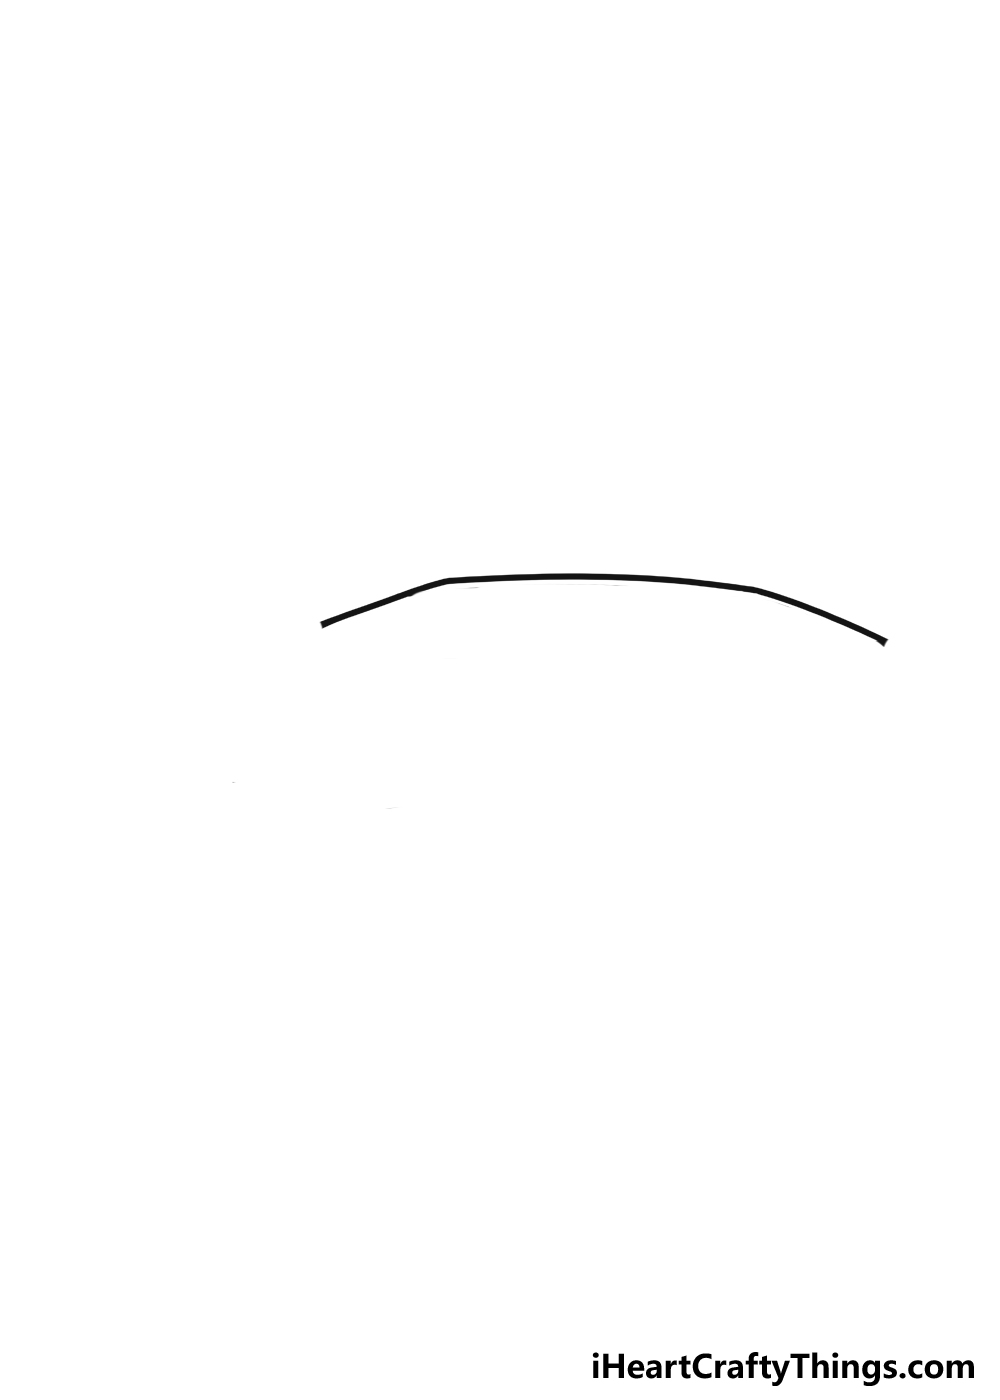 How to Draw A Lamborghini step 1